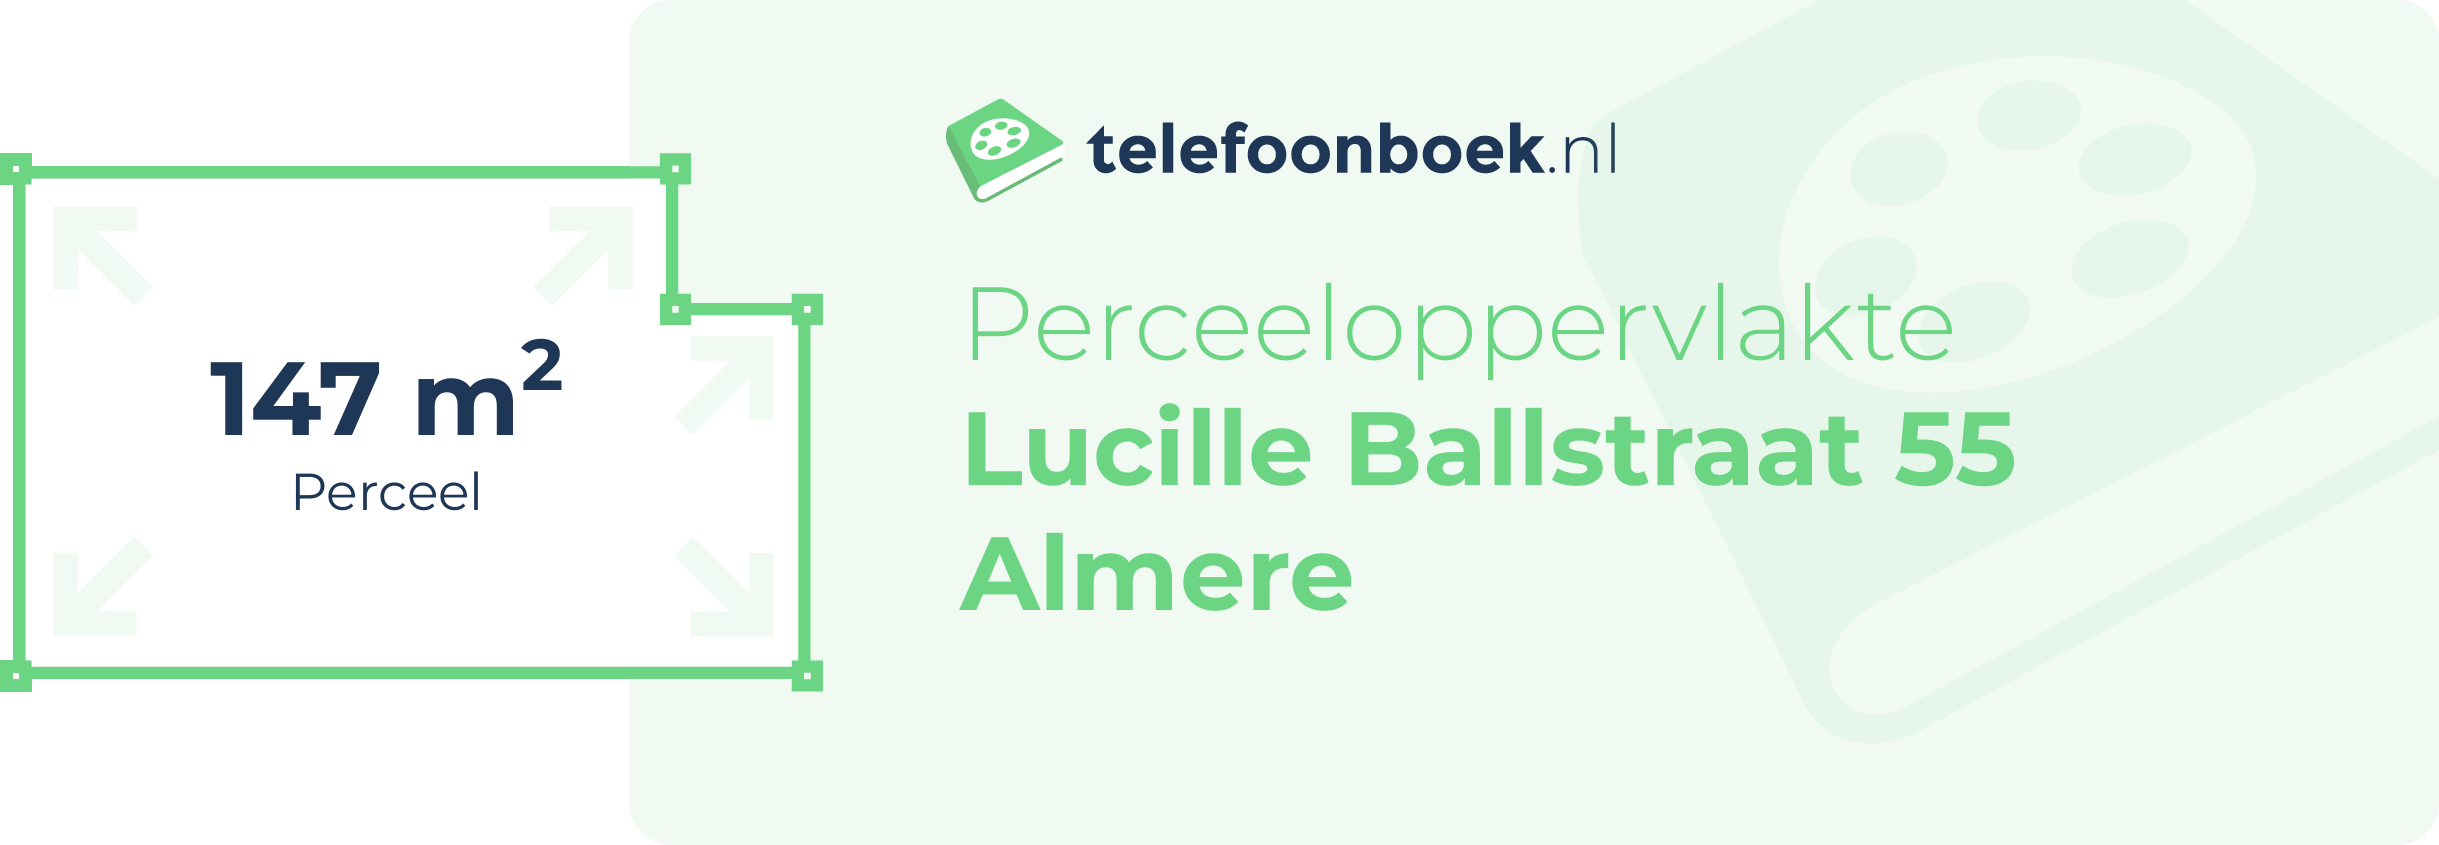 Perceeloppervlakte Lucille Ballstraat 55 Almere